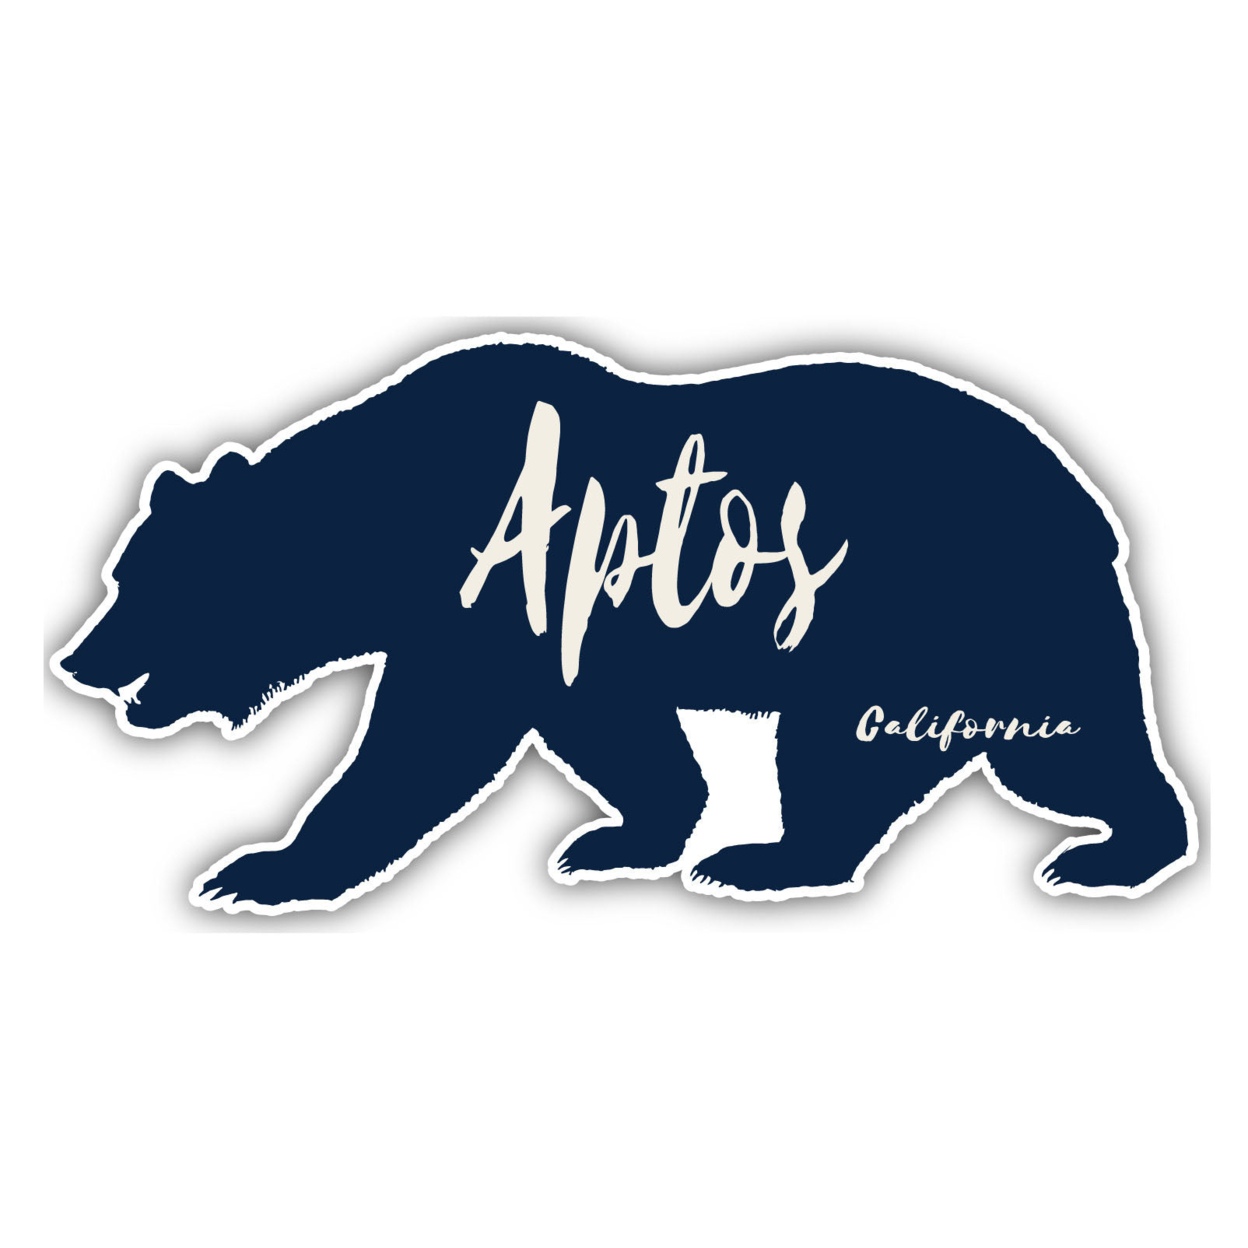 Aptos California Souvenir Decorative Stickers (Choose Theme And Size) - 4-Pack, 10-Inch, Tent